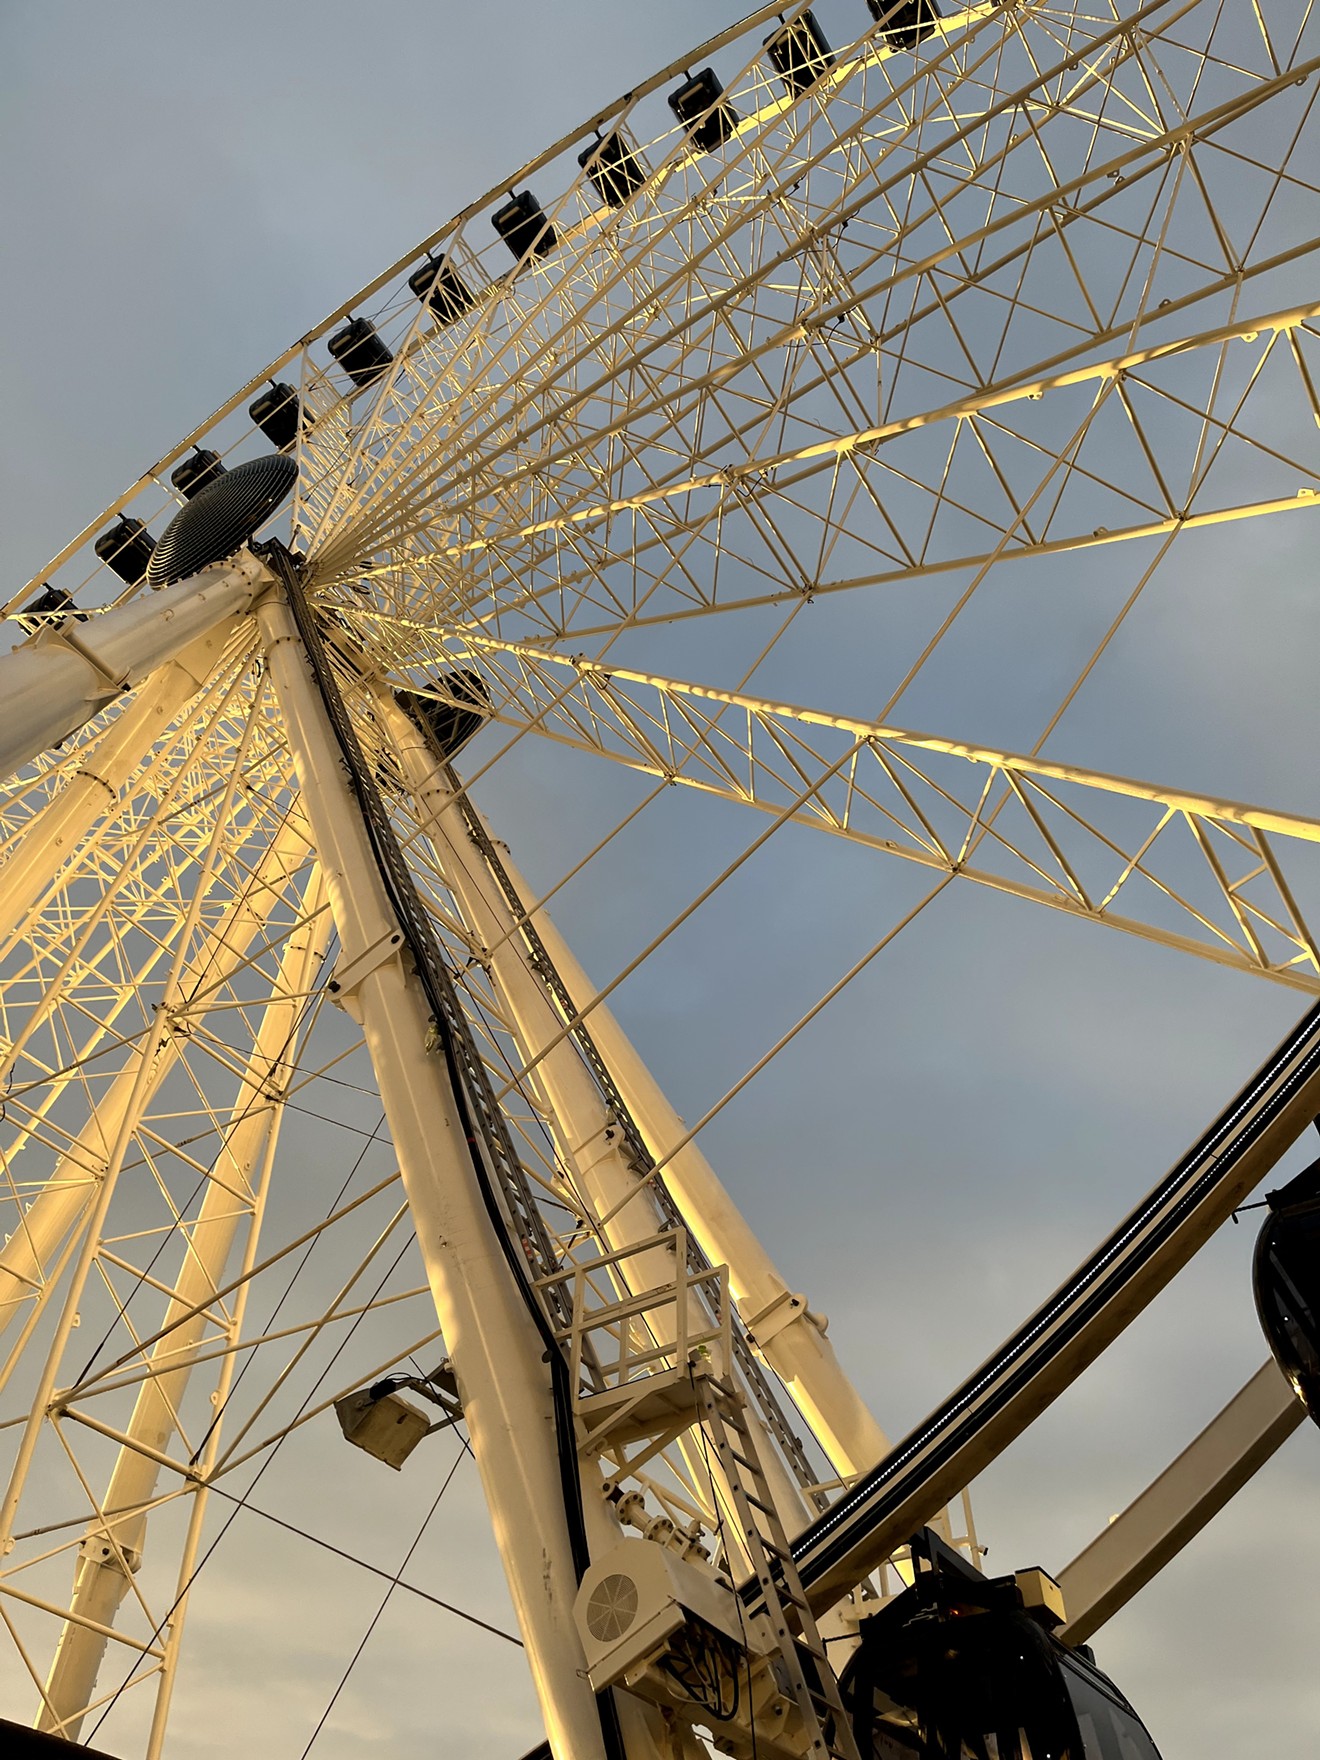 The Grandscape Wheel is a new 200-foot tall Ferris wheel at the Grandscape complex in The Colony.